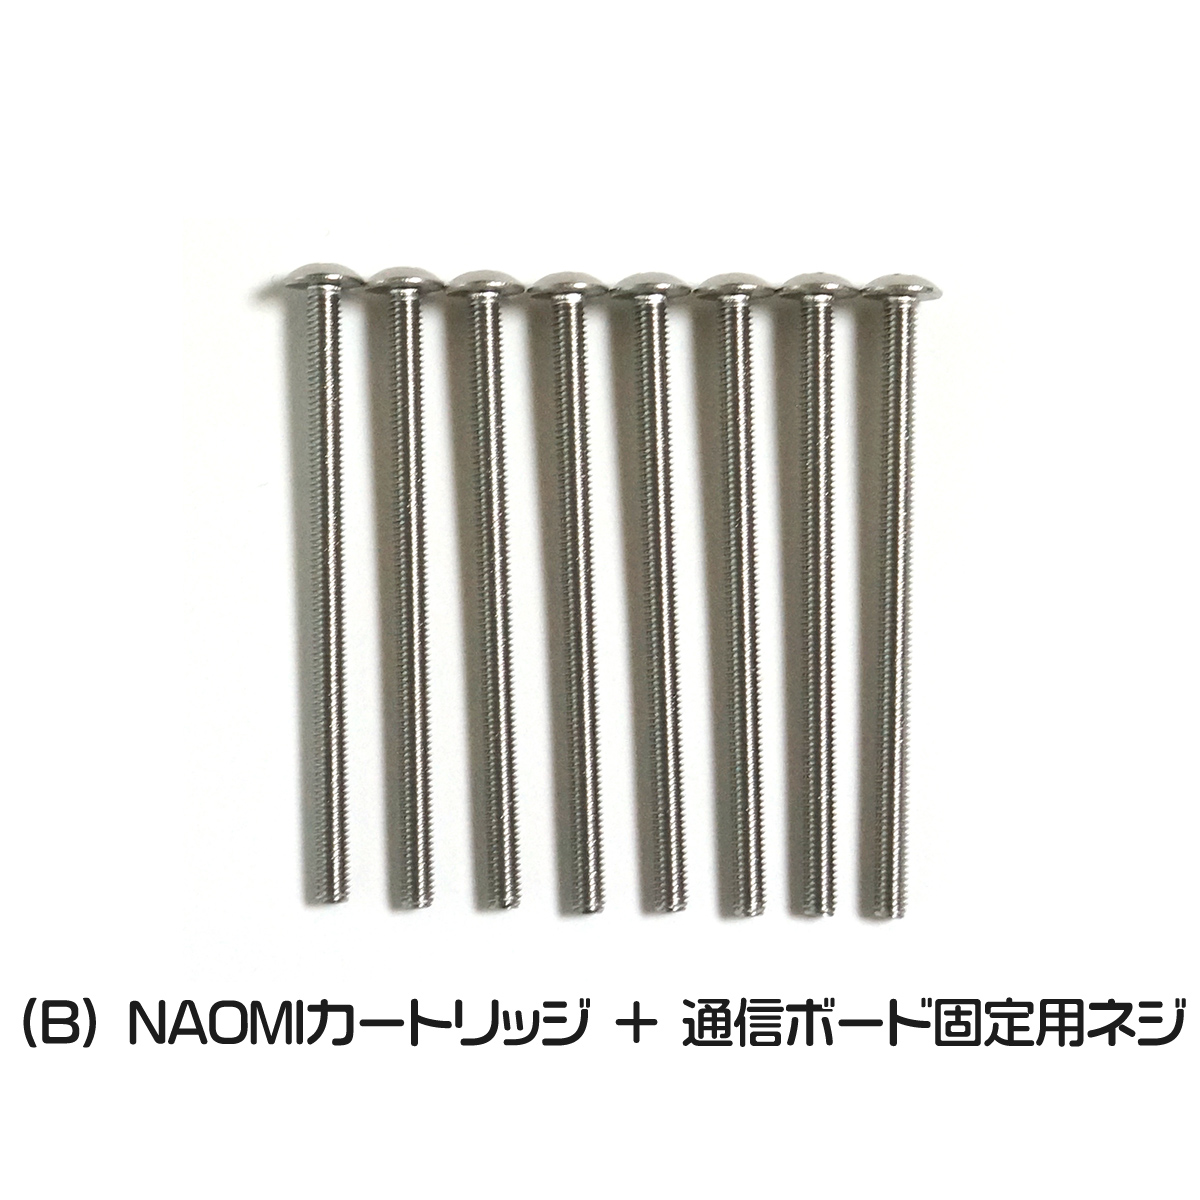 NAOMI、NAOMI-2 カートリッジ、DIMMボード、通信ボード固定用ネジセット (8本) 【NAOMI-SCRW】